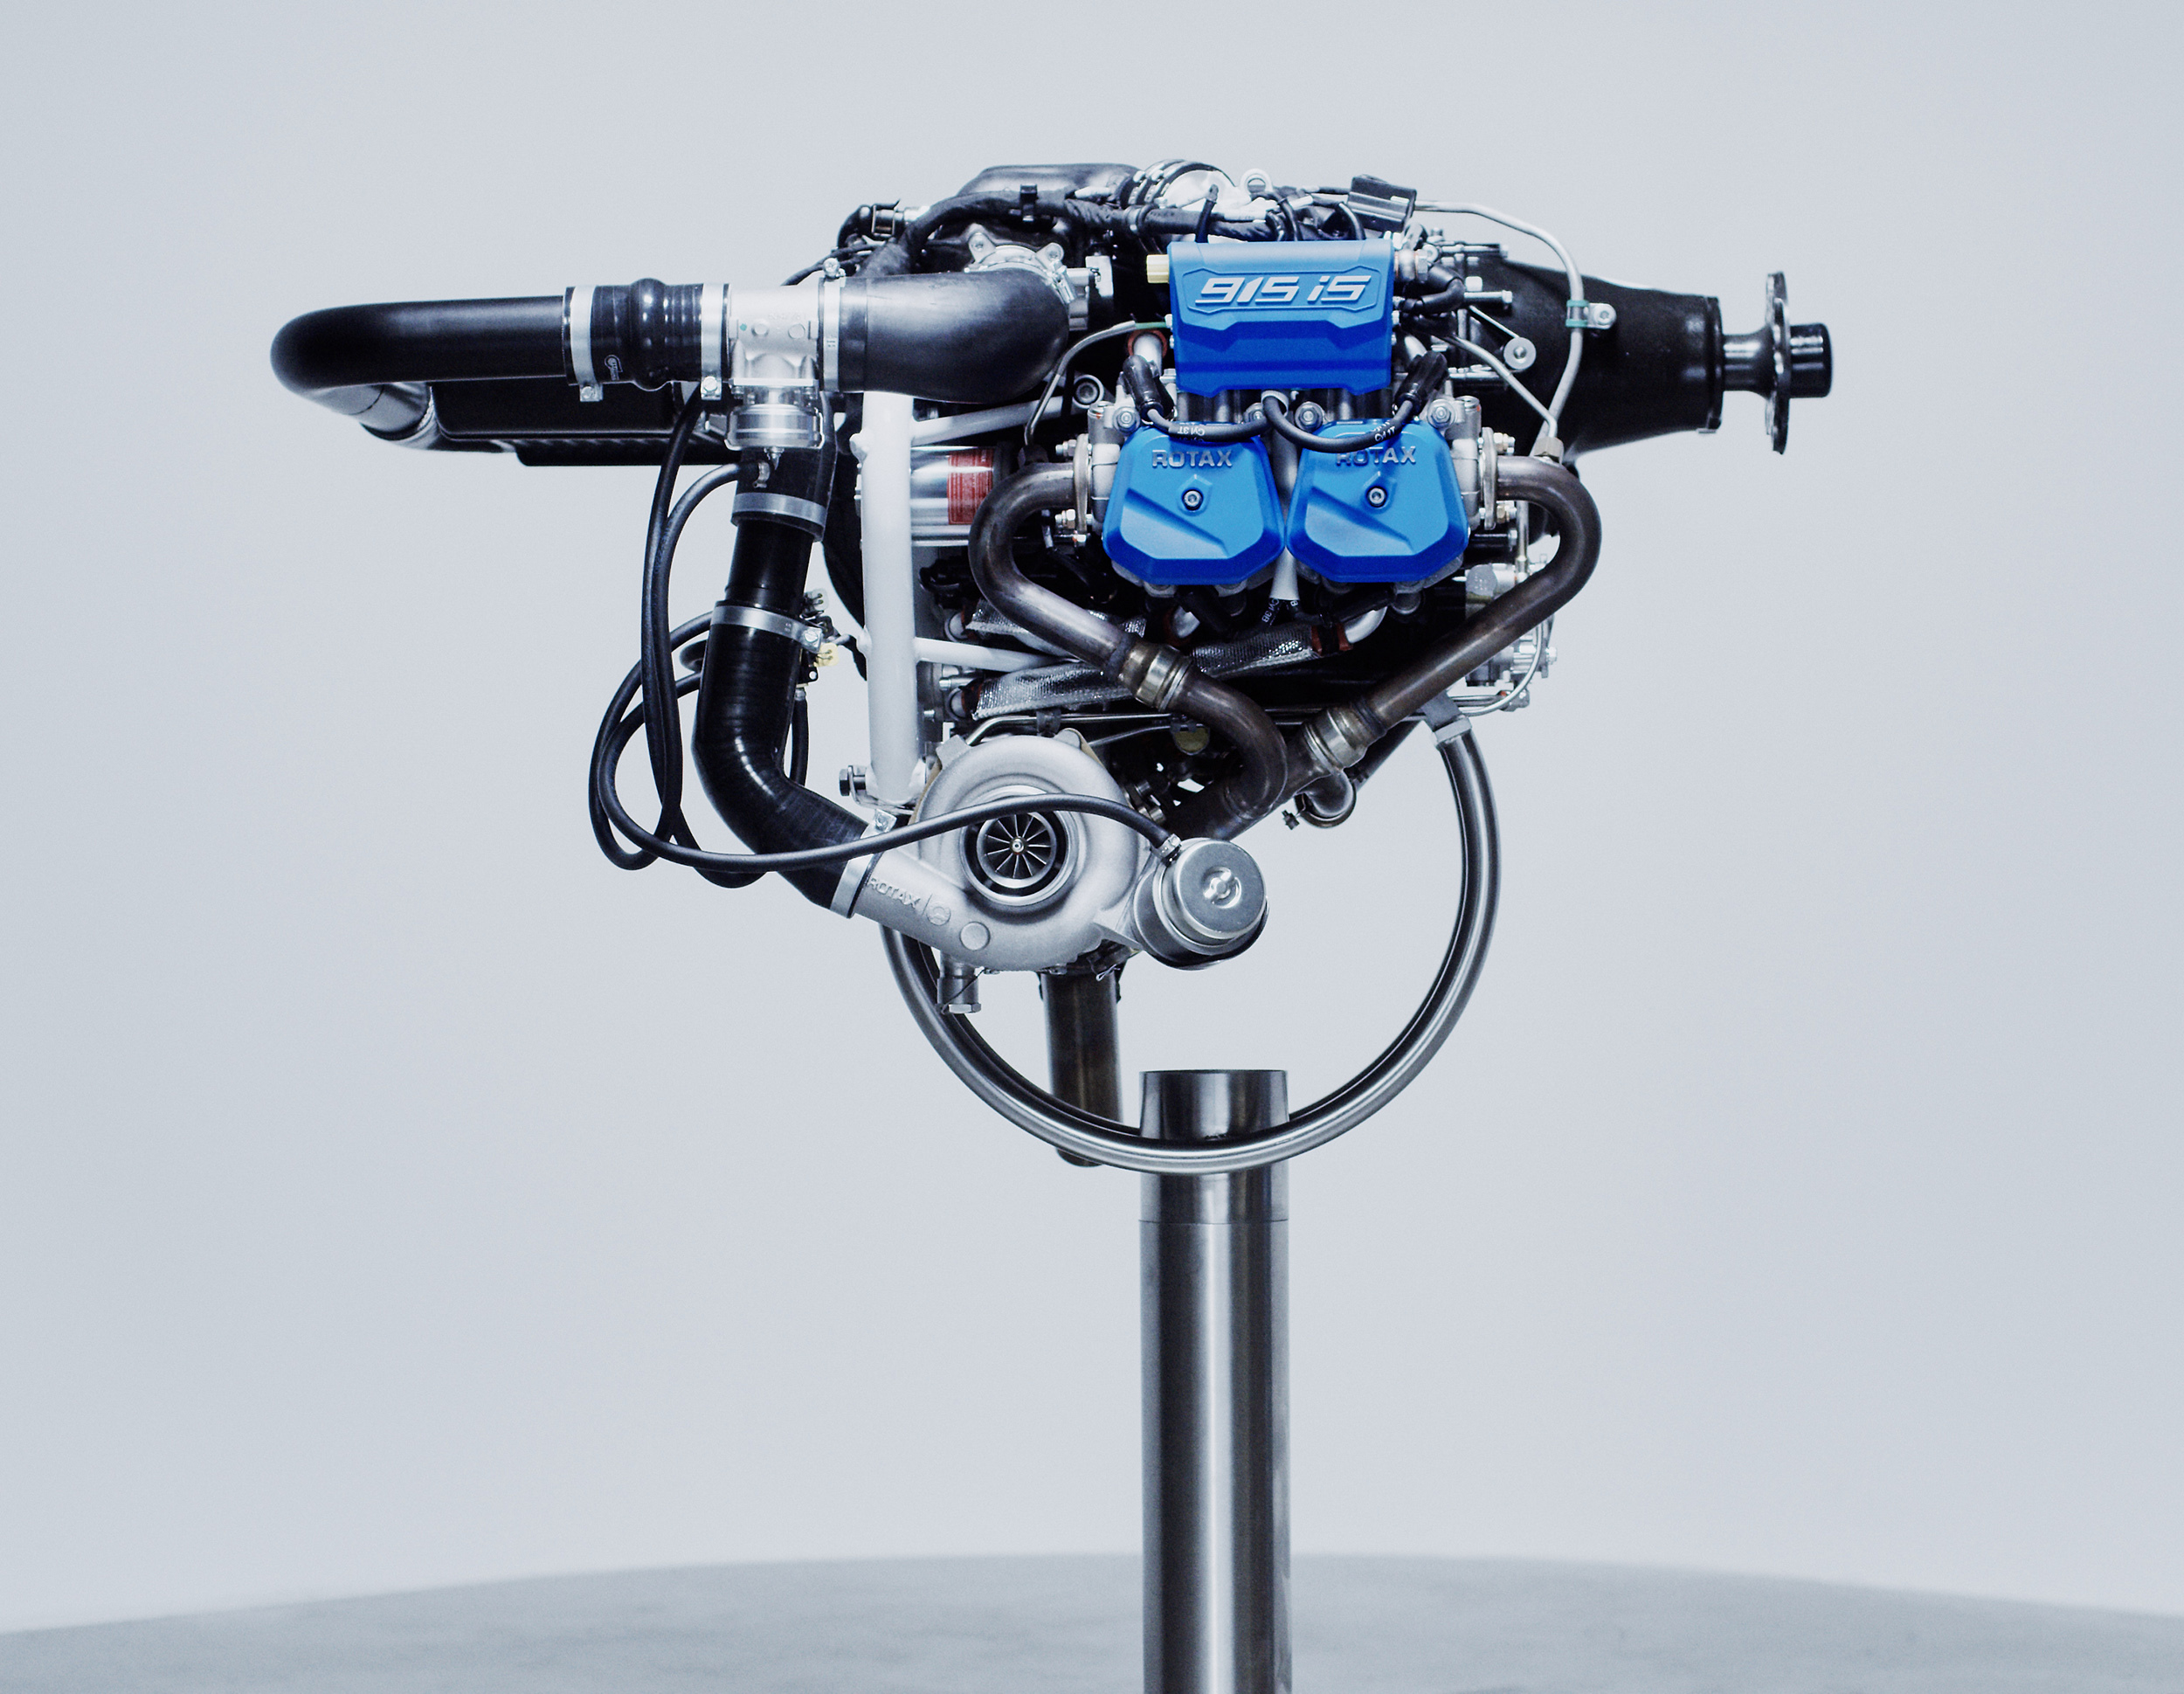 Rotax 915 i S engine